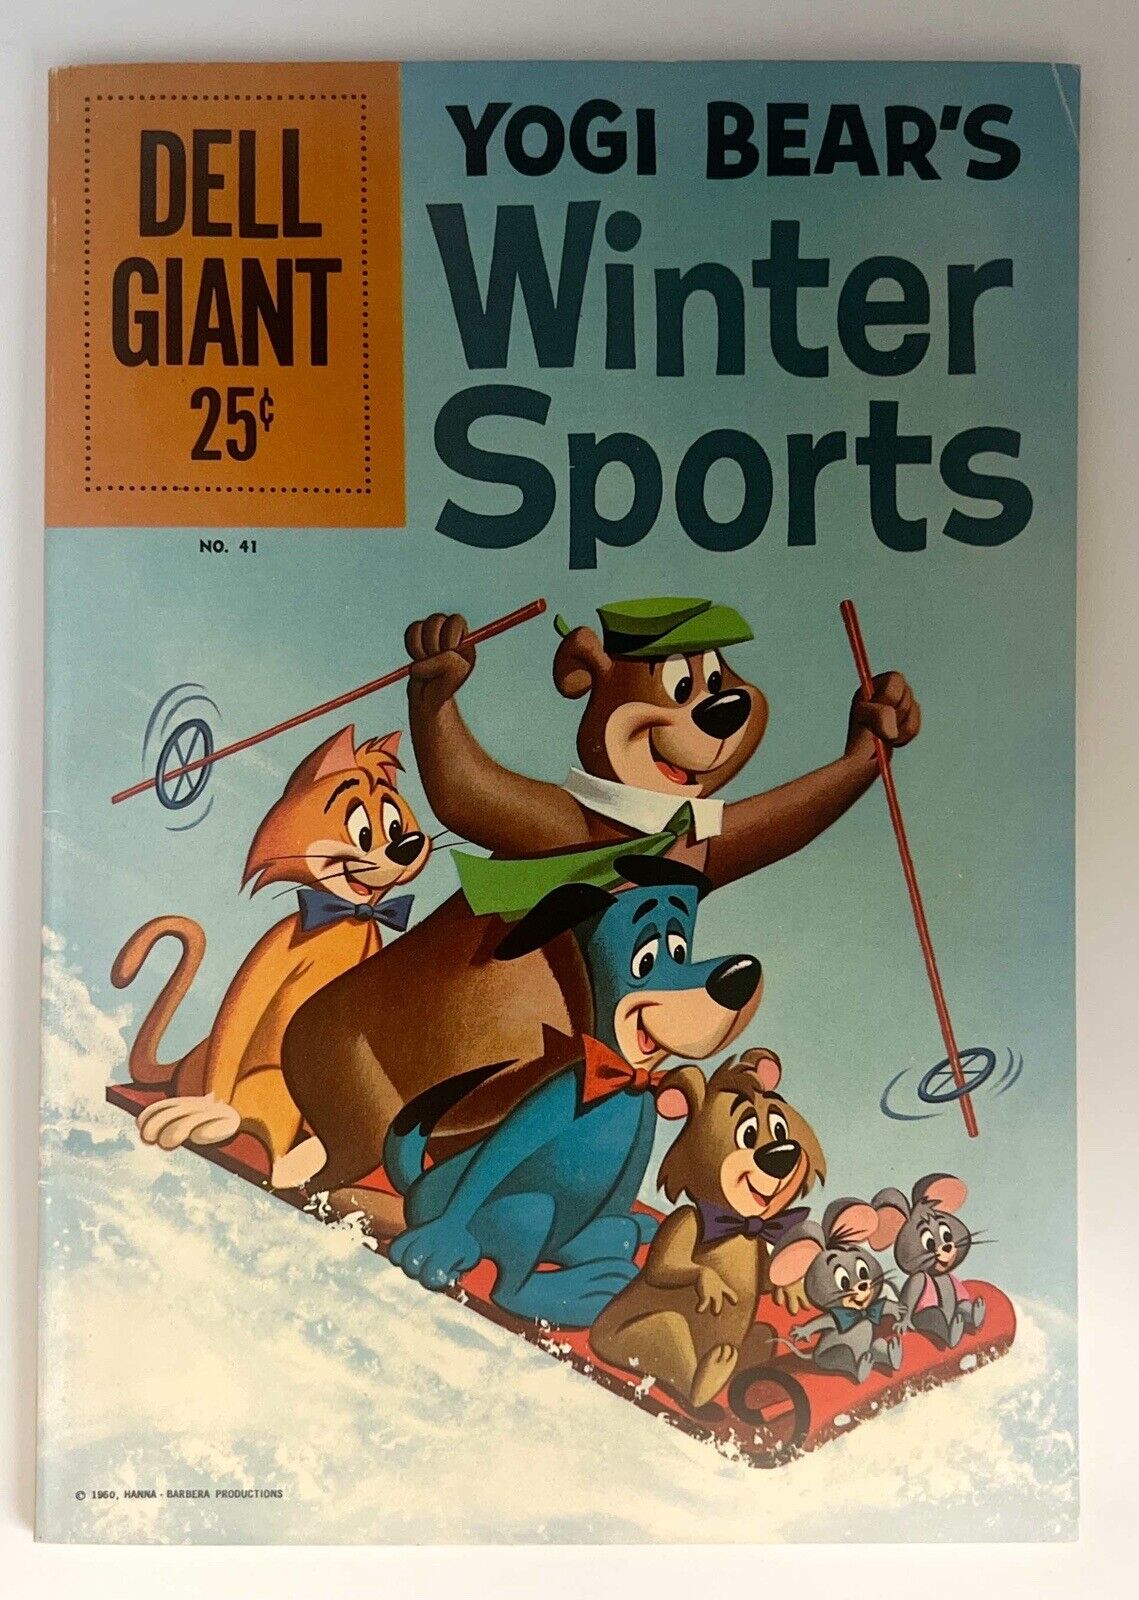 Yogi Bear's Winter Sports / Dell Giant #41, Dell 1961 Hanna-Barbera